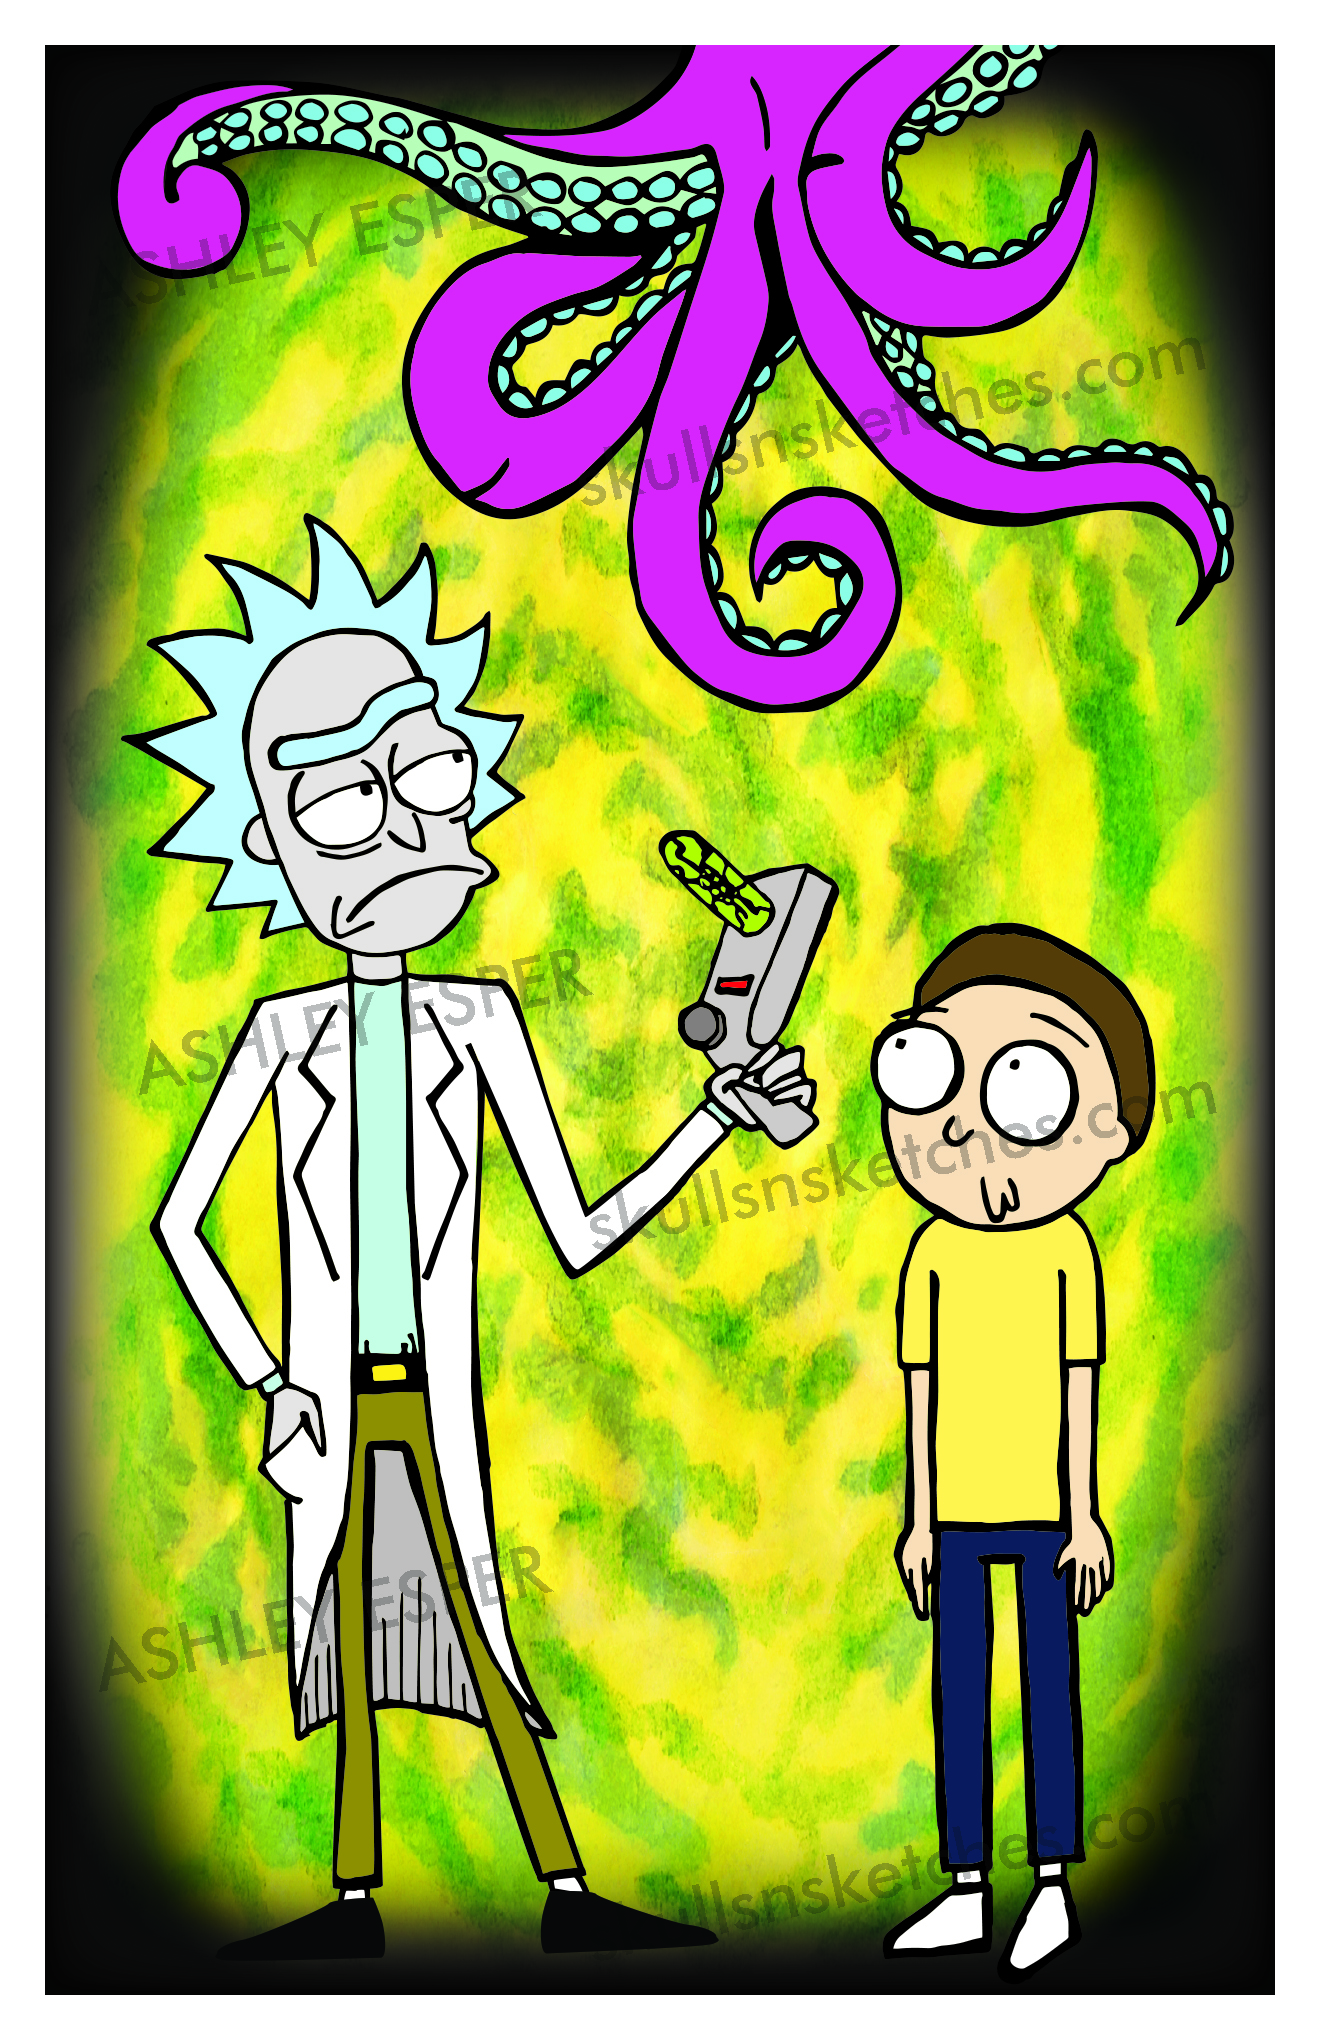 Rick and Morty.jpg